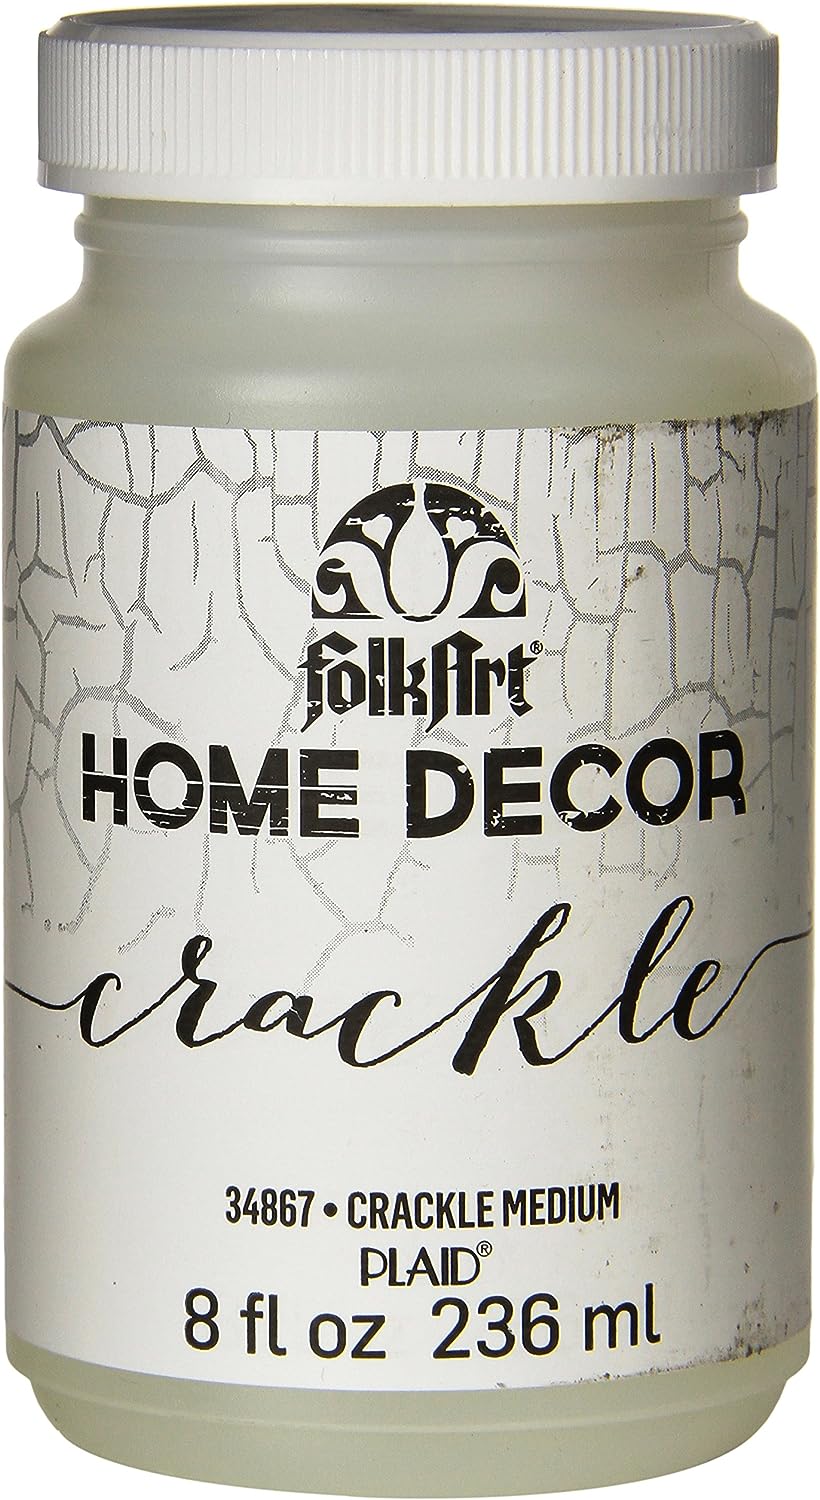 FolkArt Home Decor Chalk Furniture & Craft Acrylic [...]